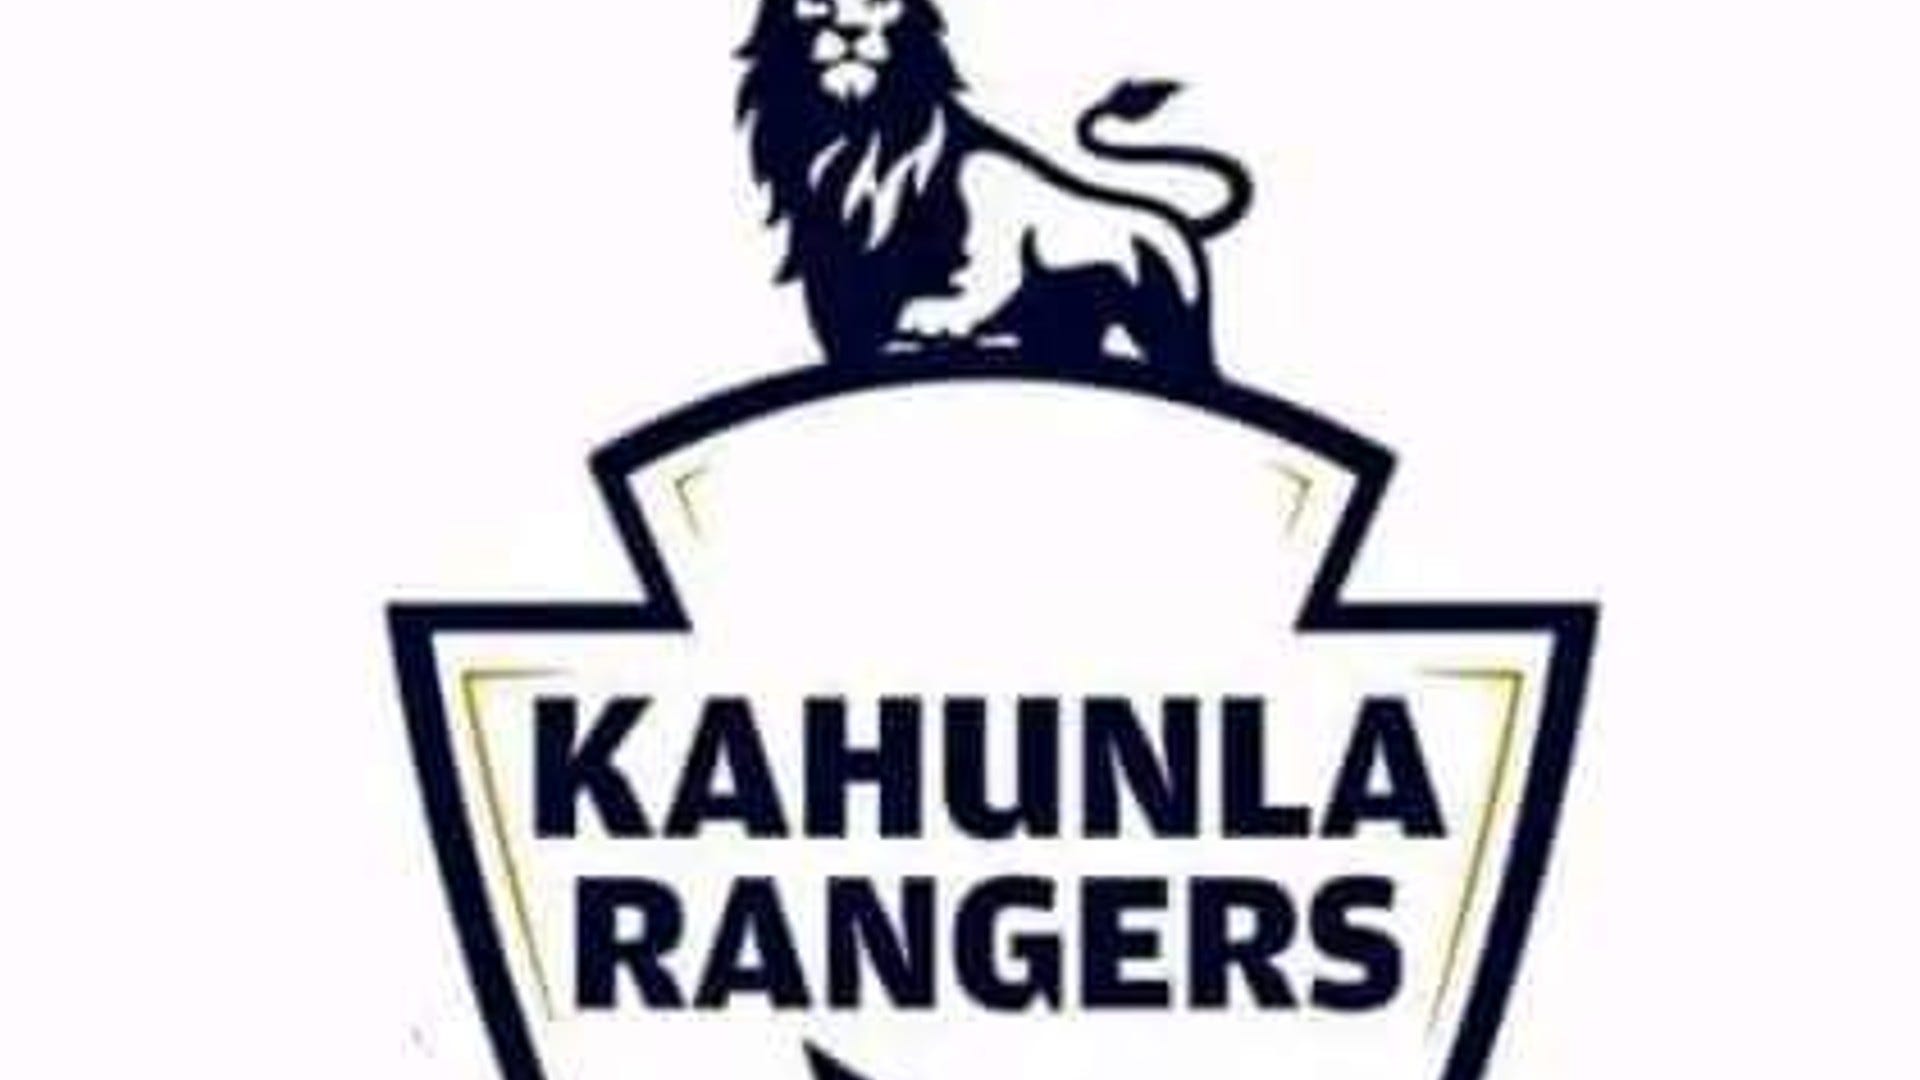 Kahunla Rangers of Sierra Leone.